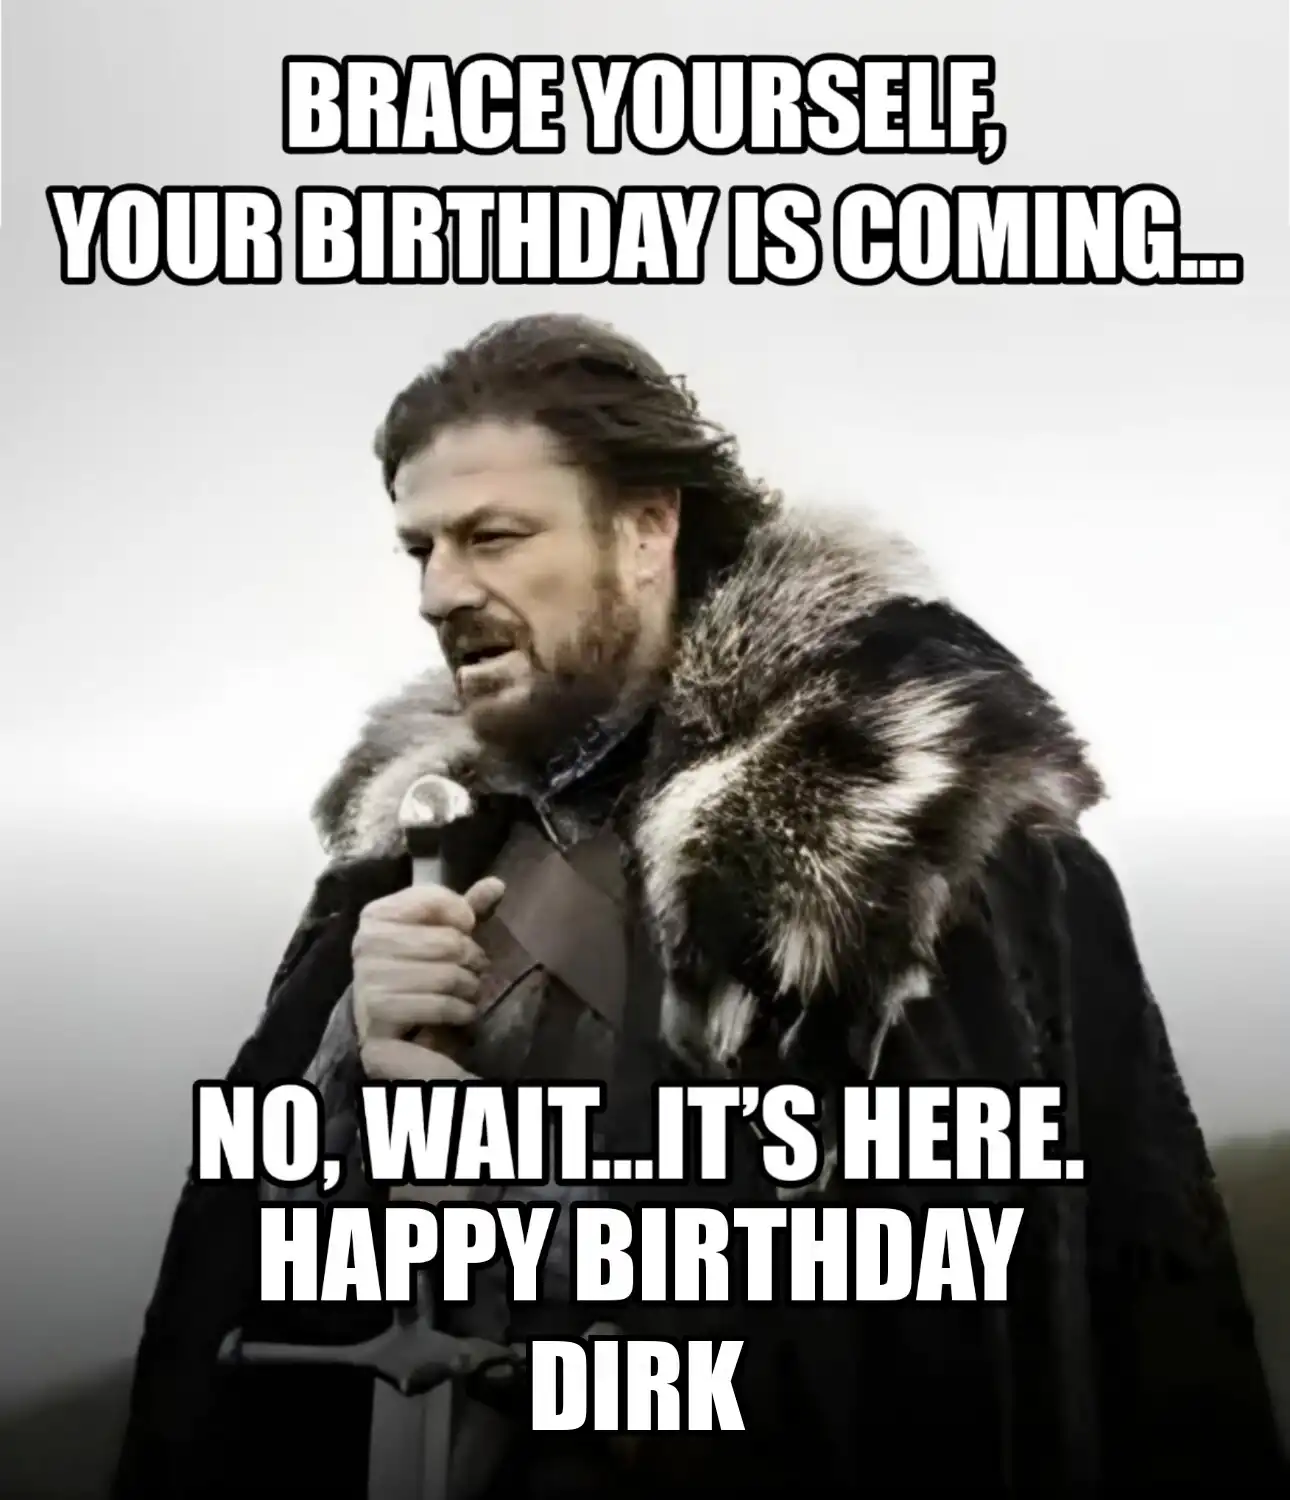 Happy Birthday Dirk Brace Yourself Your Birthday Is Coming Meme